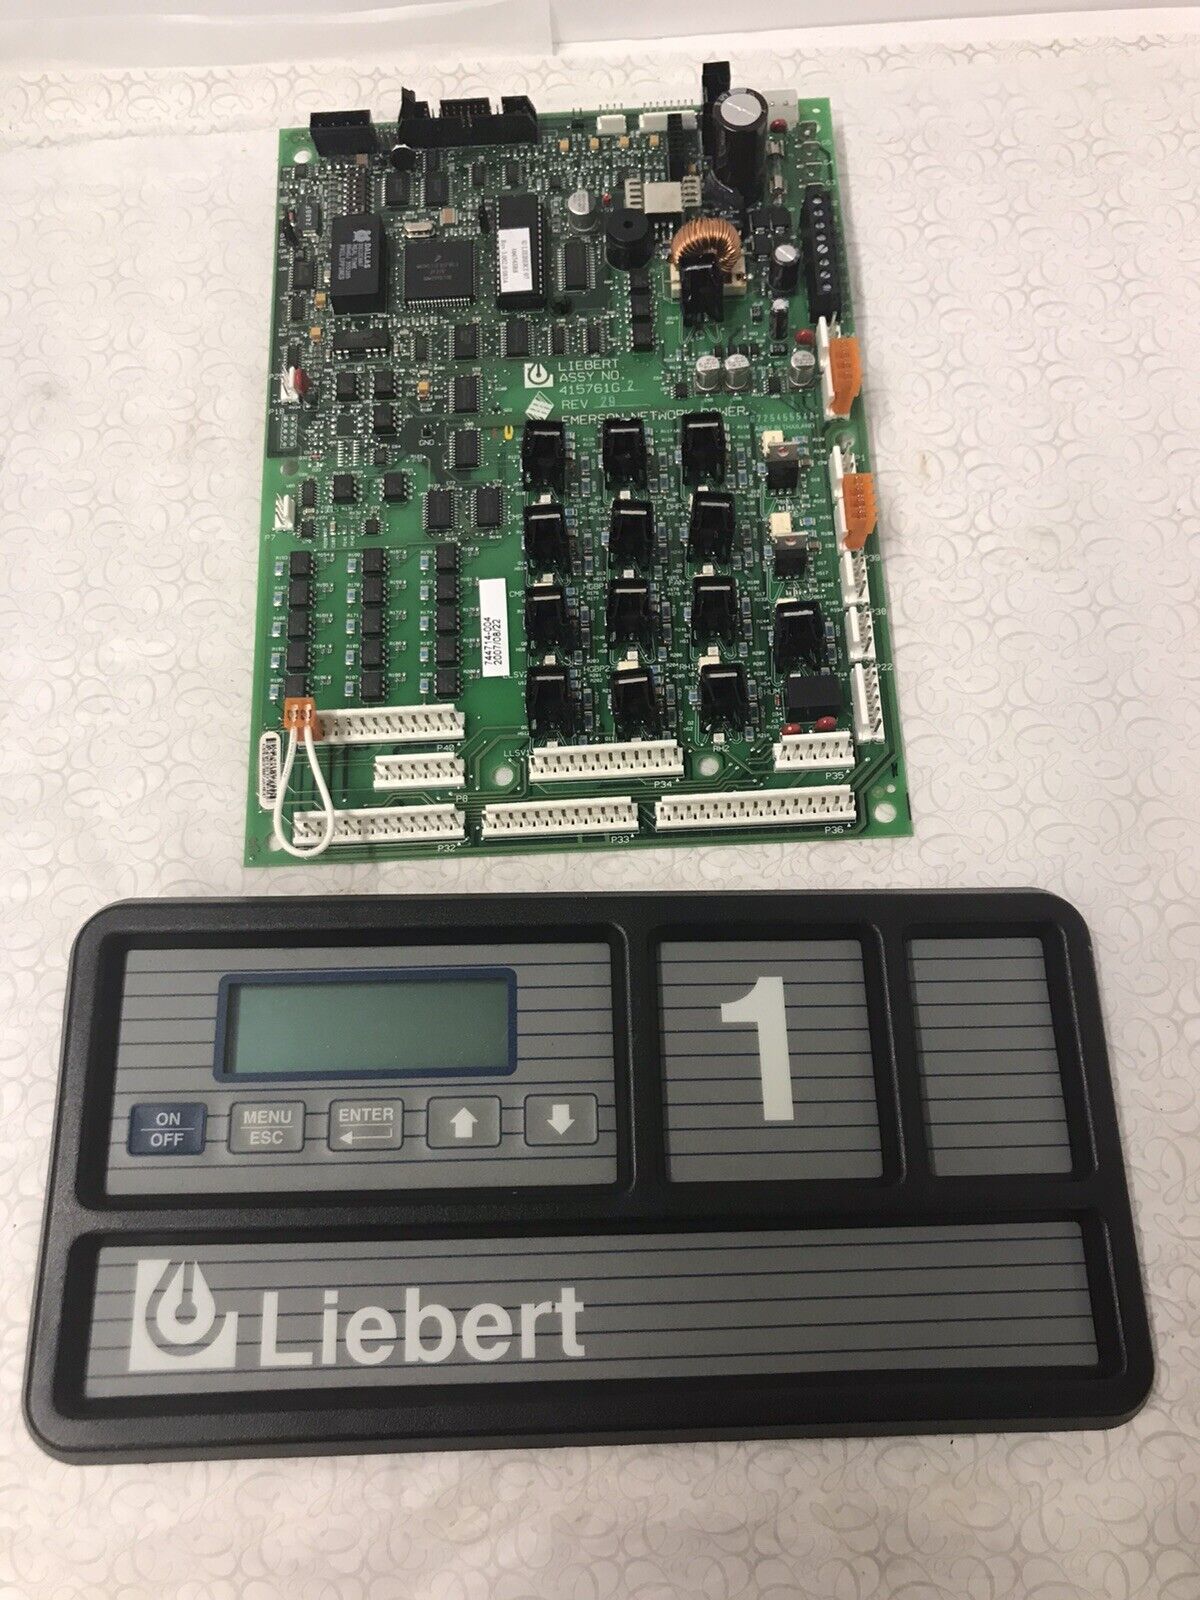 Liebert 415761G-2 R29 Advanced Microprocessor Control & Display Panel 166819G1